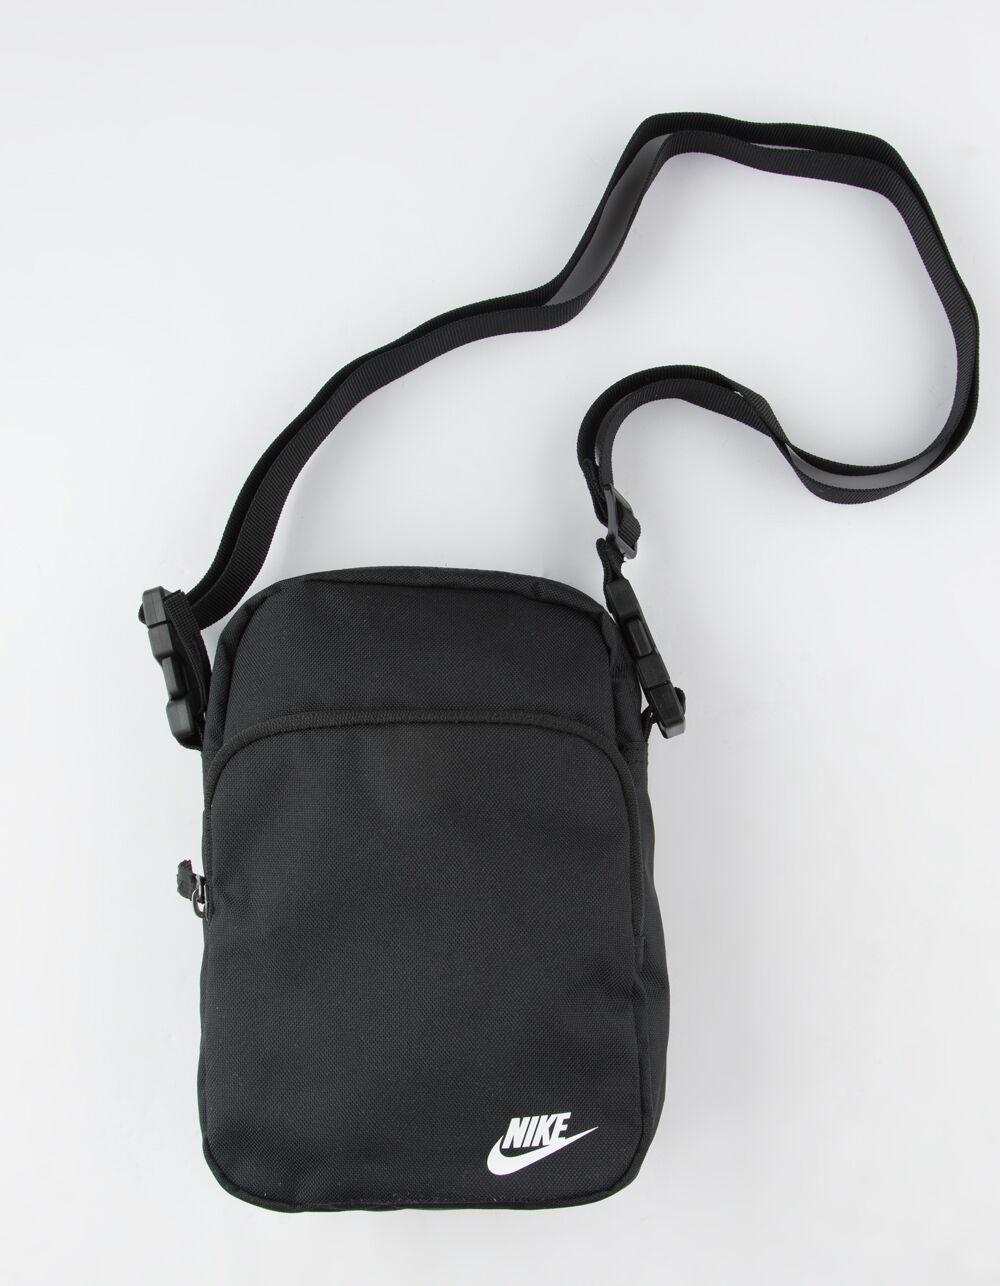 Nike Synthetic Heritage Smit 2.0 Crossbody Bag in Black - Lyst